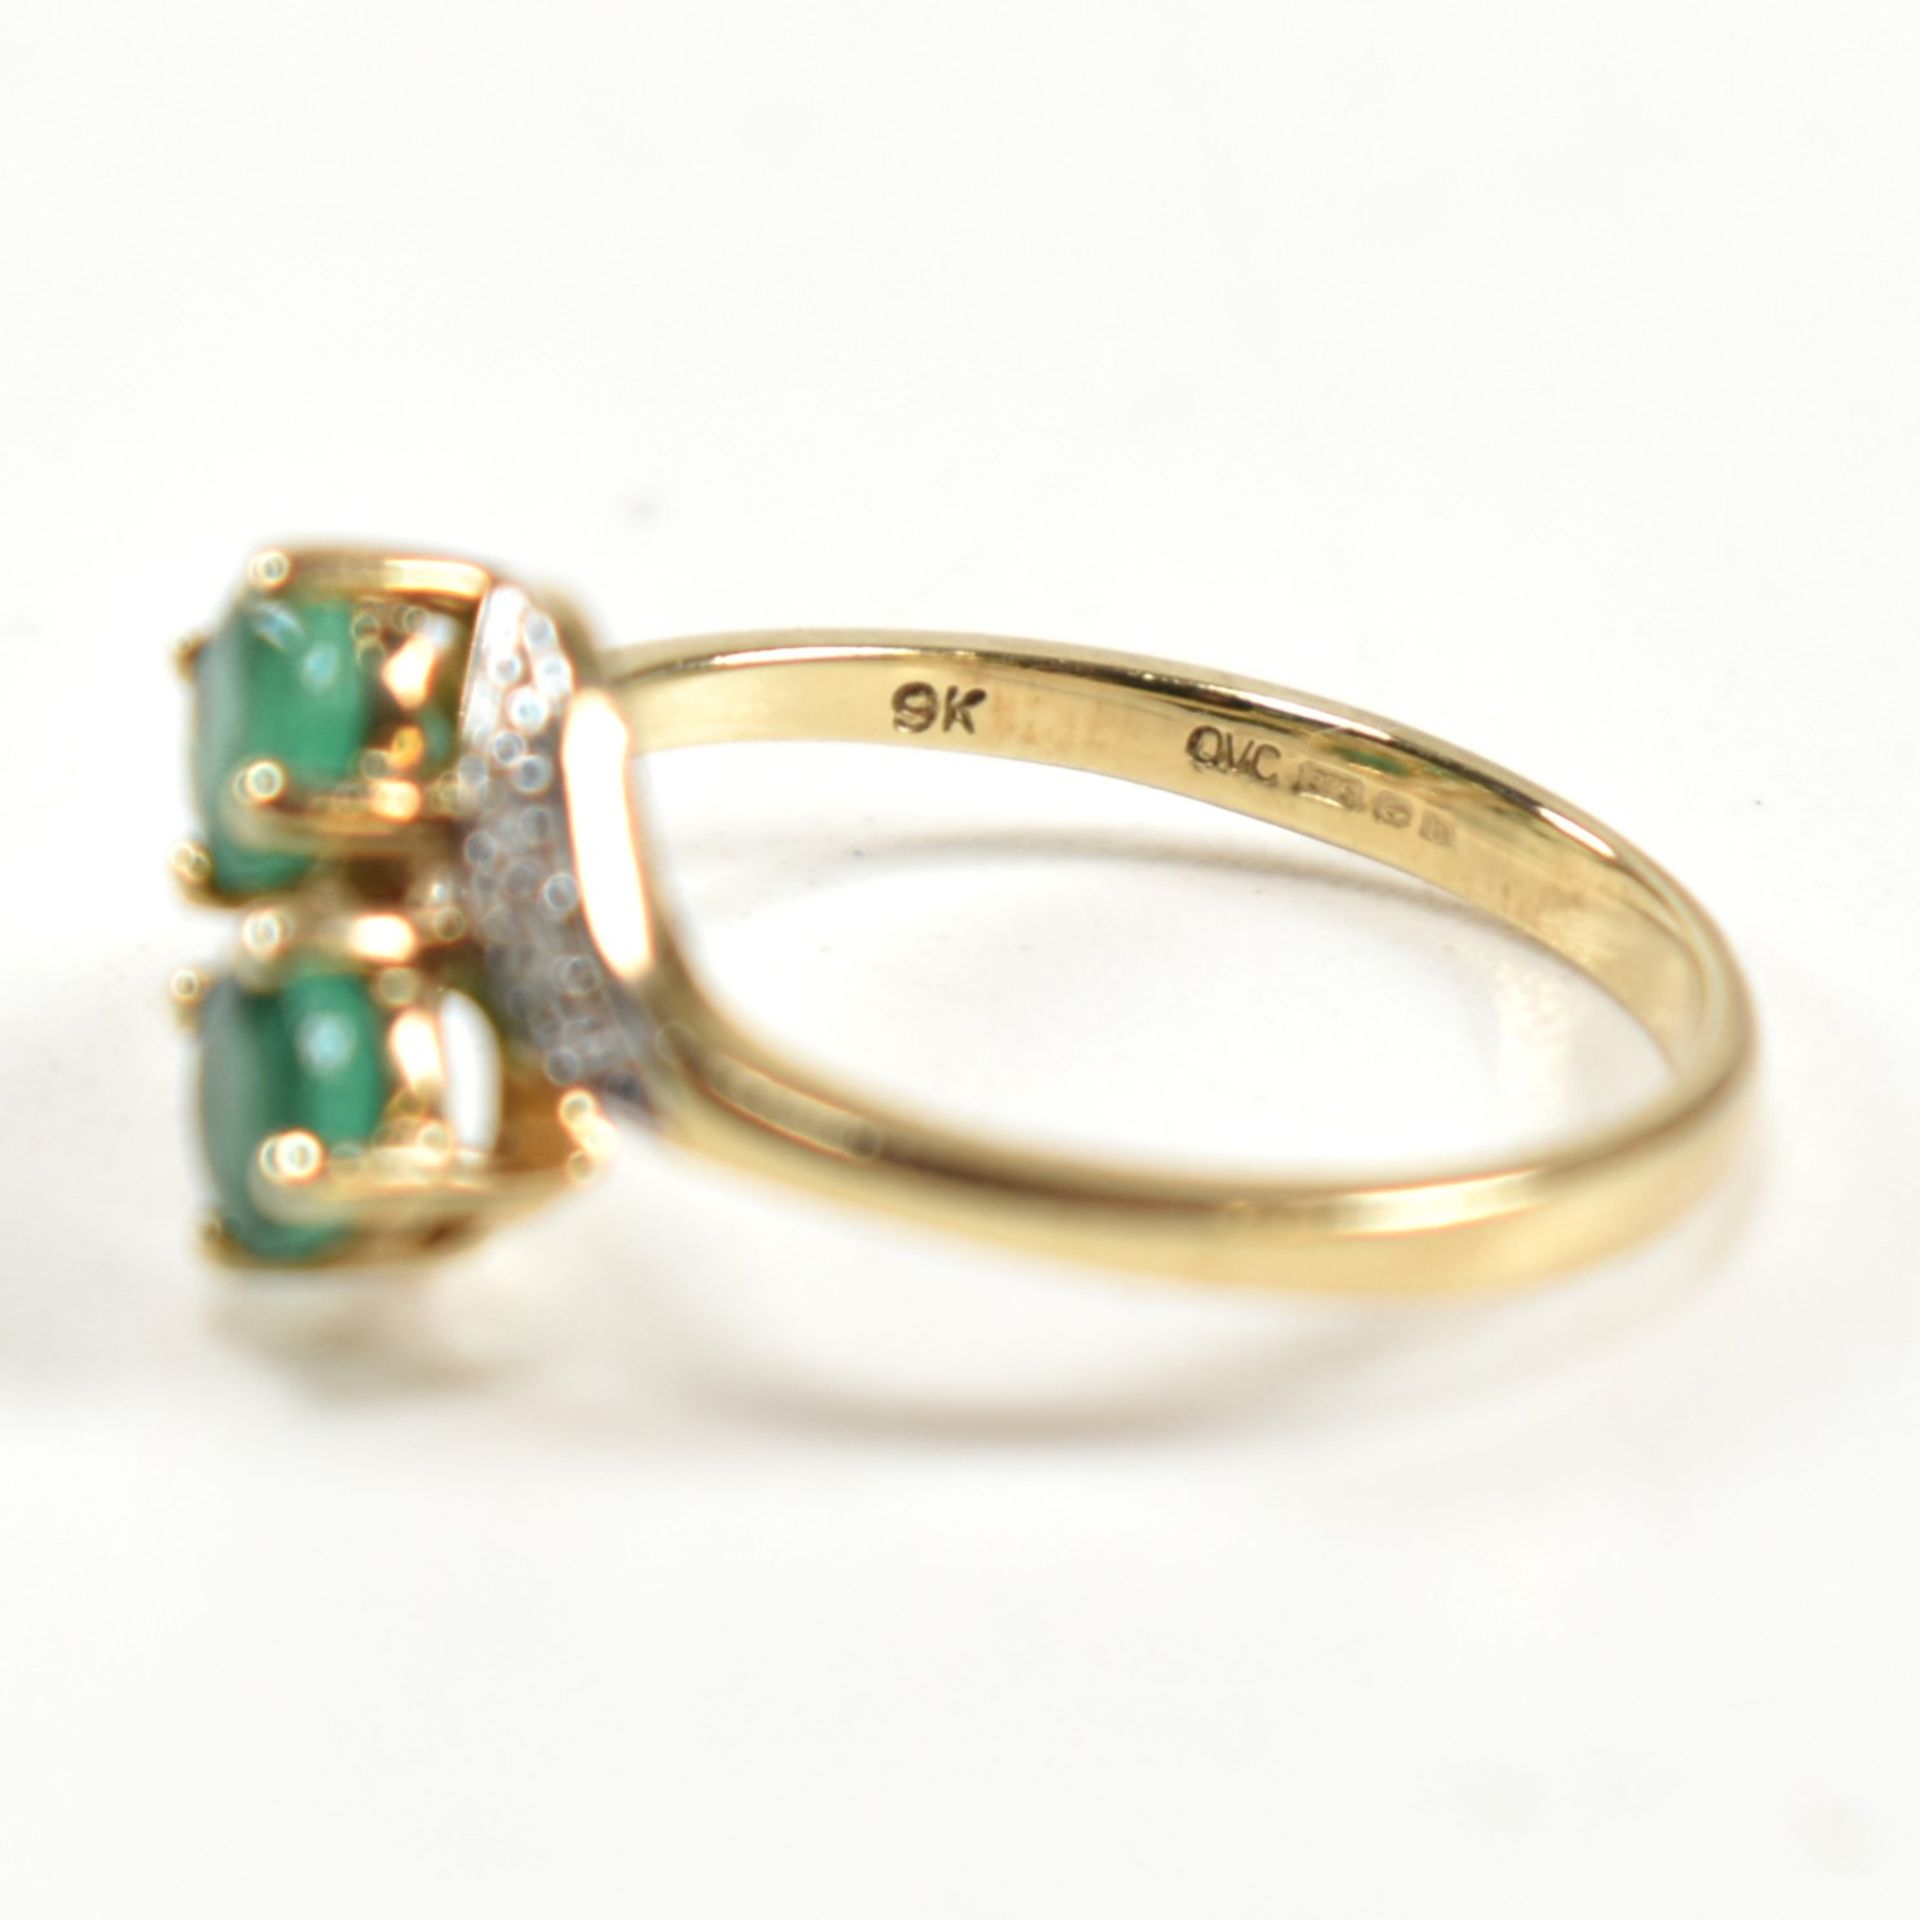 HALLMARKED 9CT GOLD EMERALD & DIAMOND CROSSOVER RING - Image 5 of 8